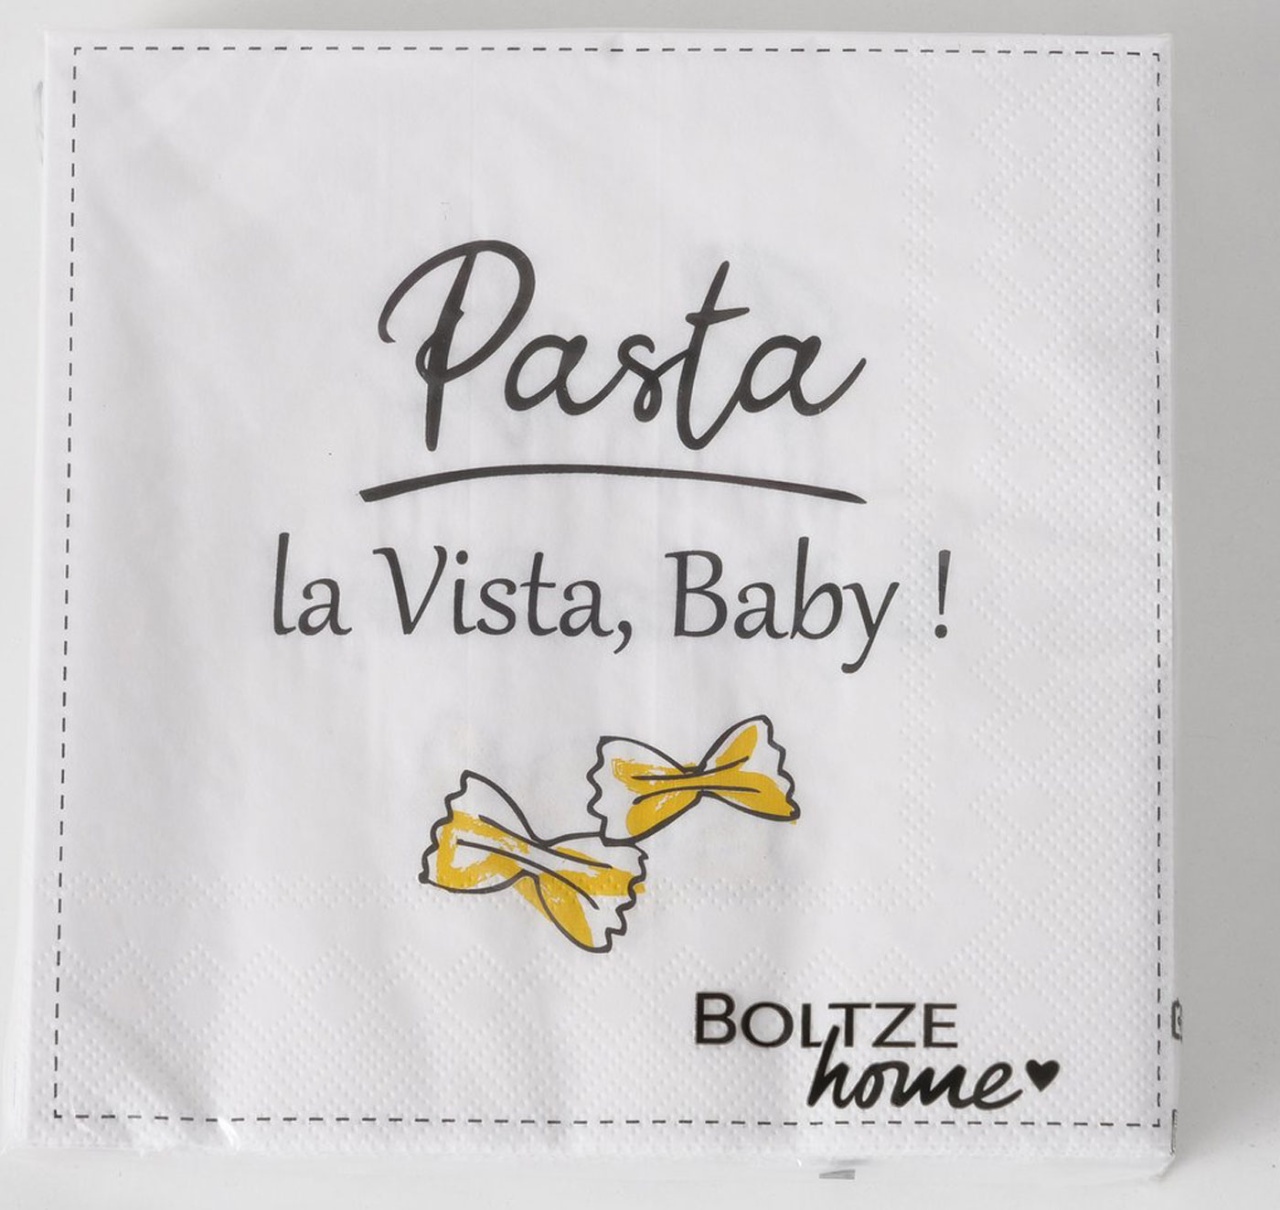 Boltze Servietten Italia Pasta la Vista, Baby! 20 Stk.